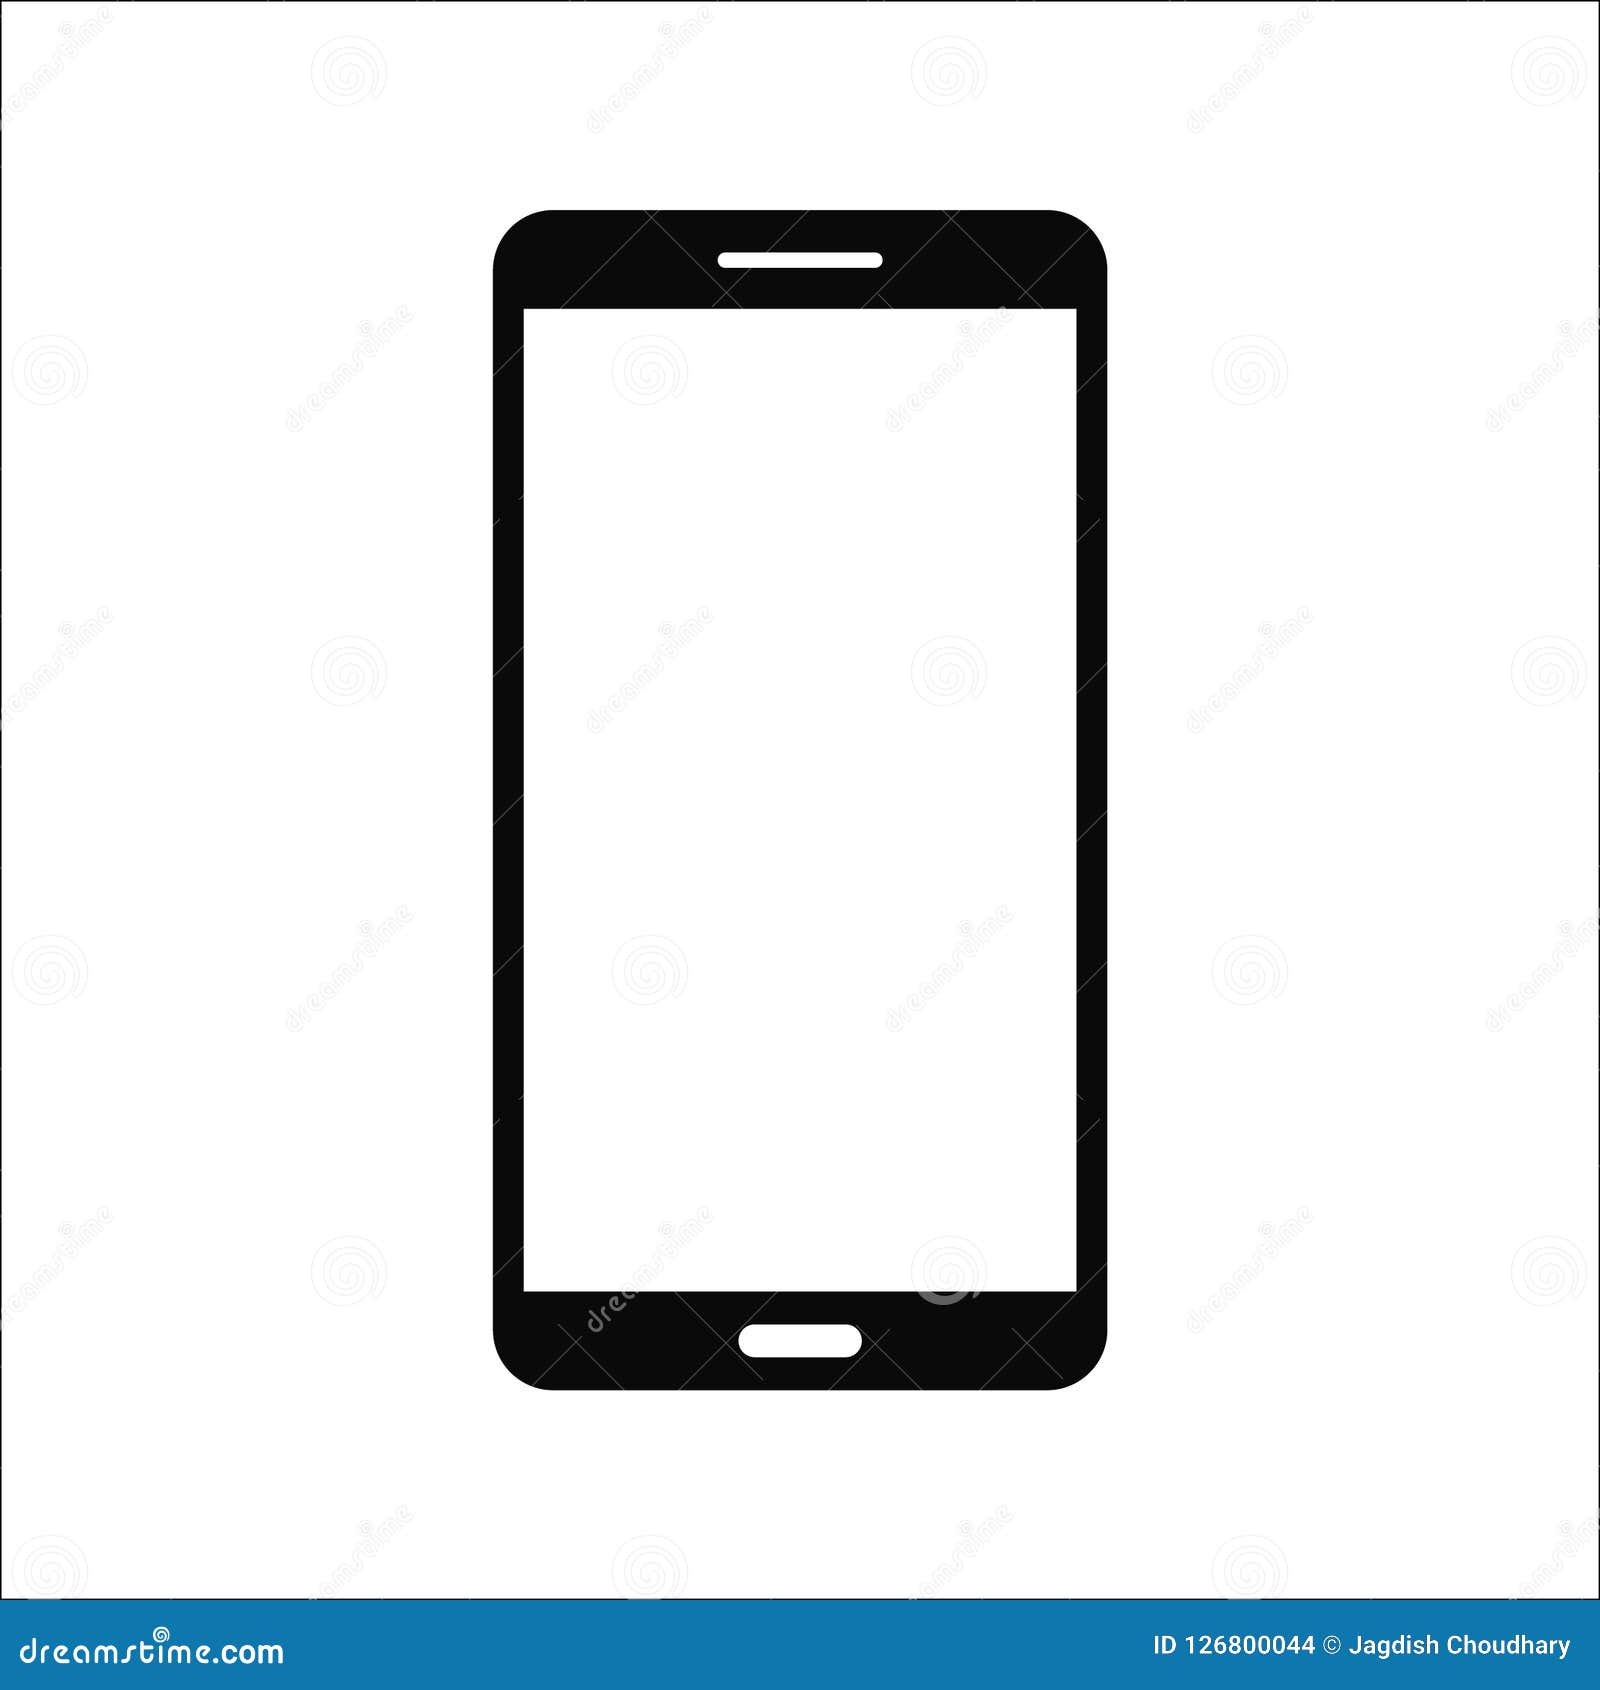 Isolated Touchscreen 9:16 Black Smartphone on White Background. Smartphone  Symbol Illustration Stock Illustration - Illustration of blank, latest:  126800044